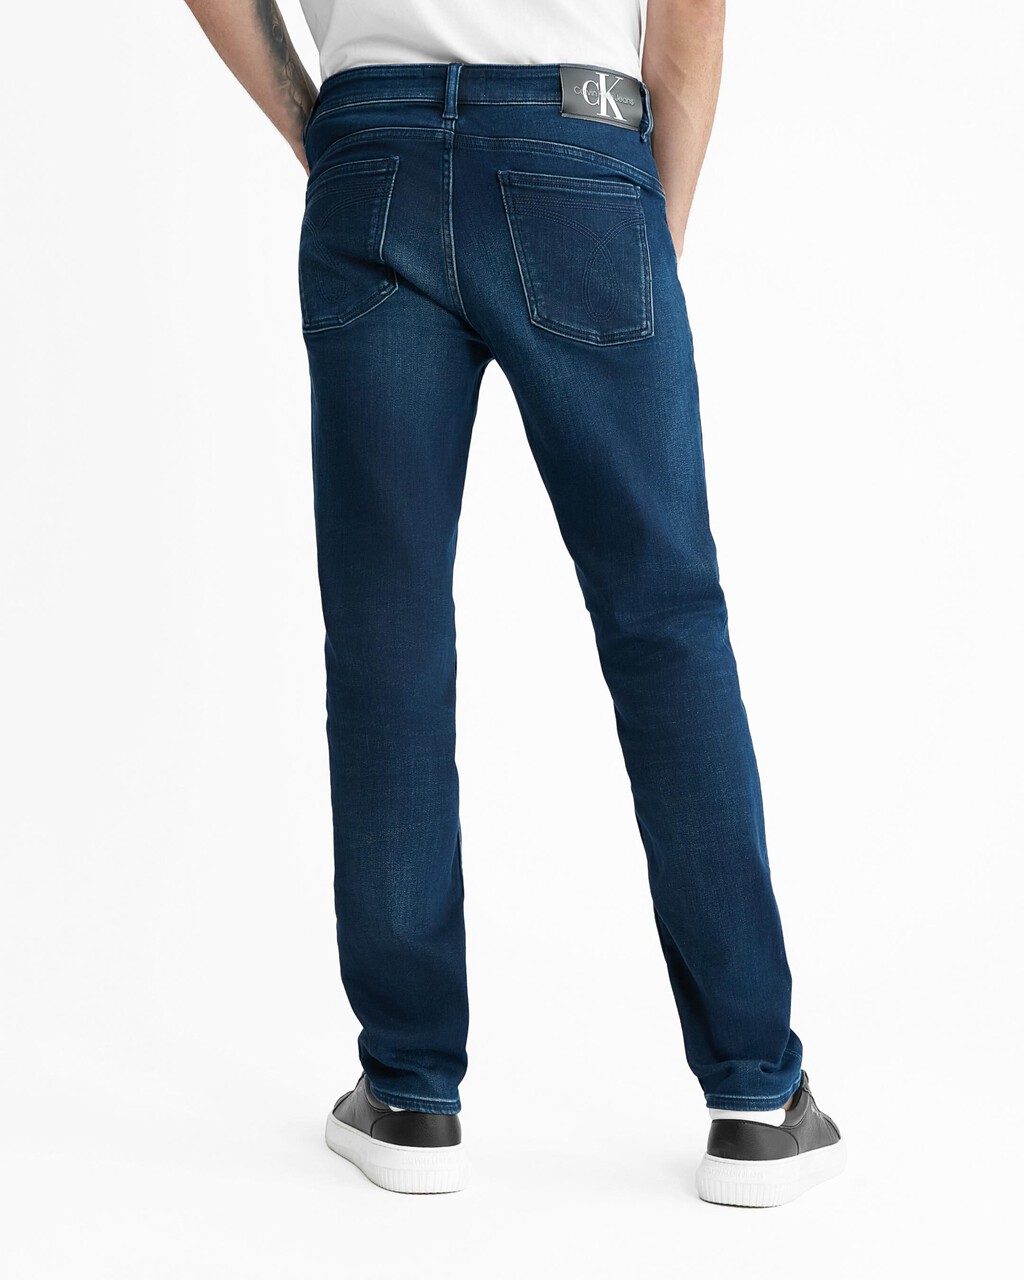 Luxe Lined Body Jeans, Denim Dark, hi-res